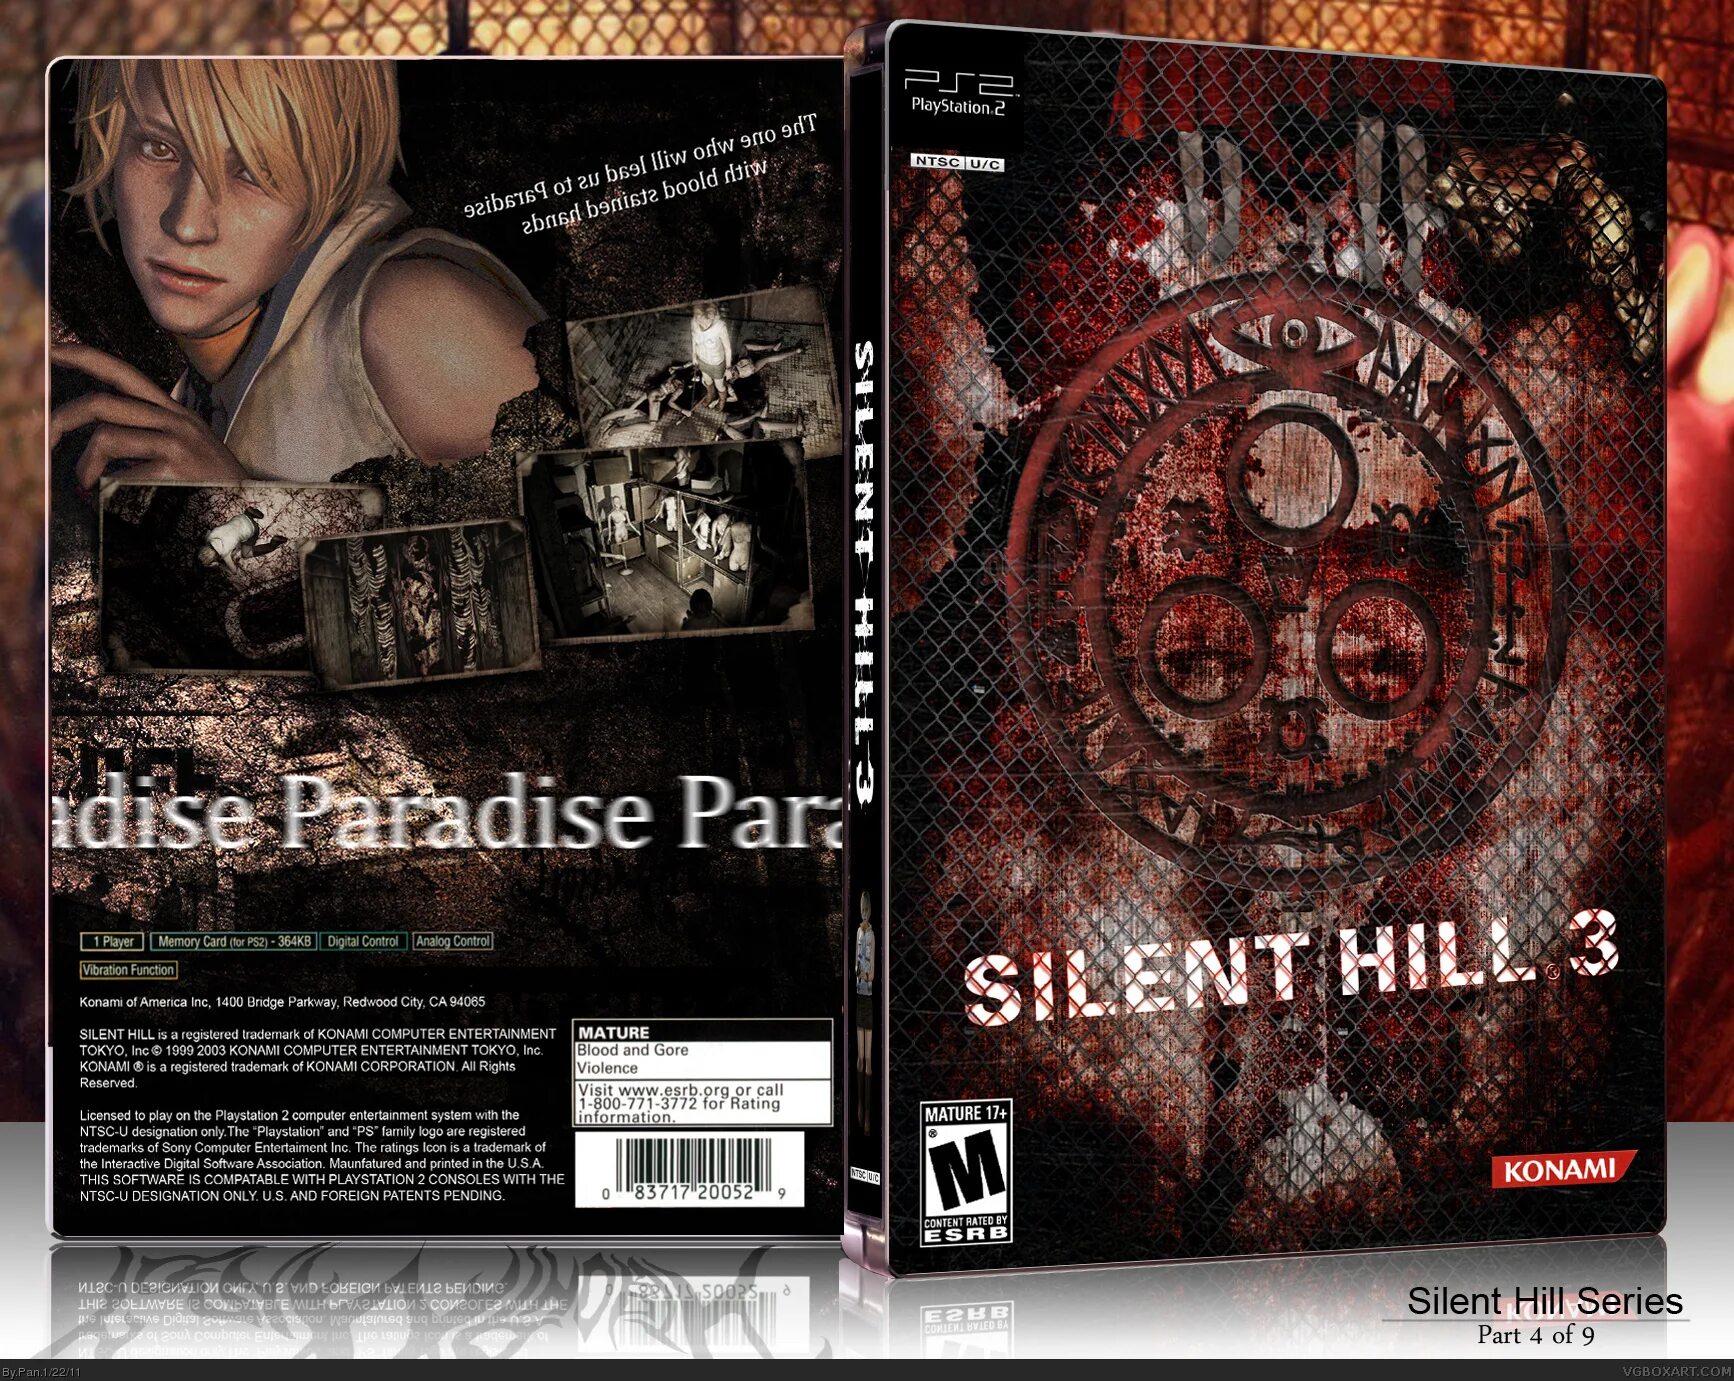 Silent Hill 3 ps2 Box Cover. Silent Hill 3 PLAYSTATION 2 обложка. Сайлент хилл перевод